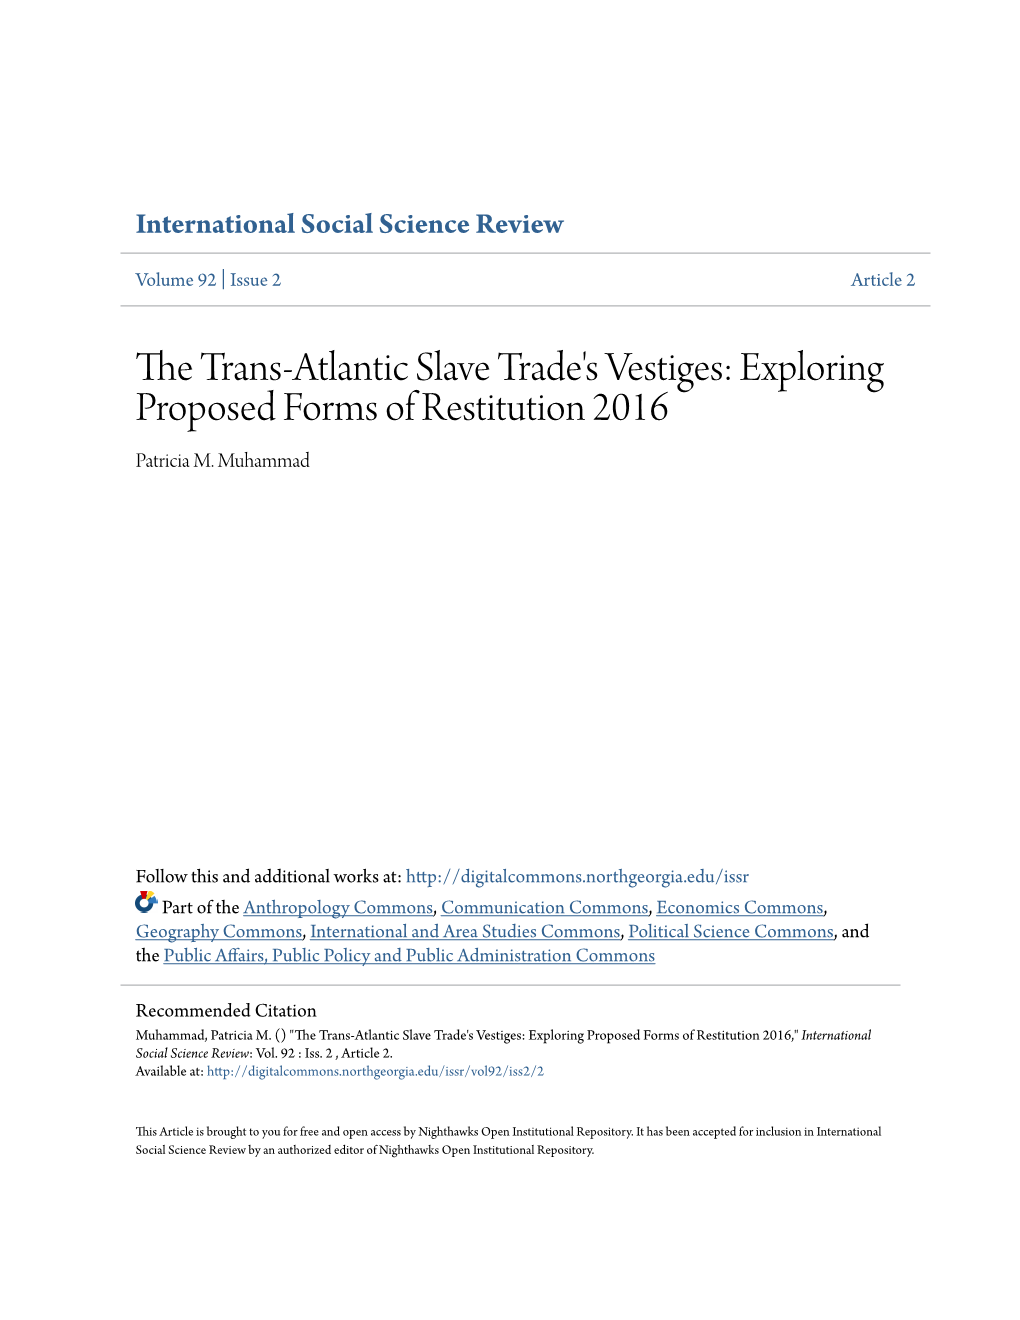 The Trans-Atlantic Slave Trade's Vestiges